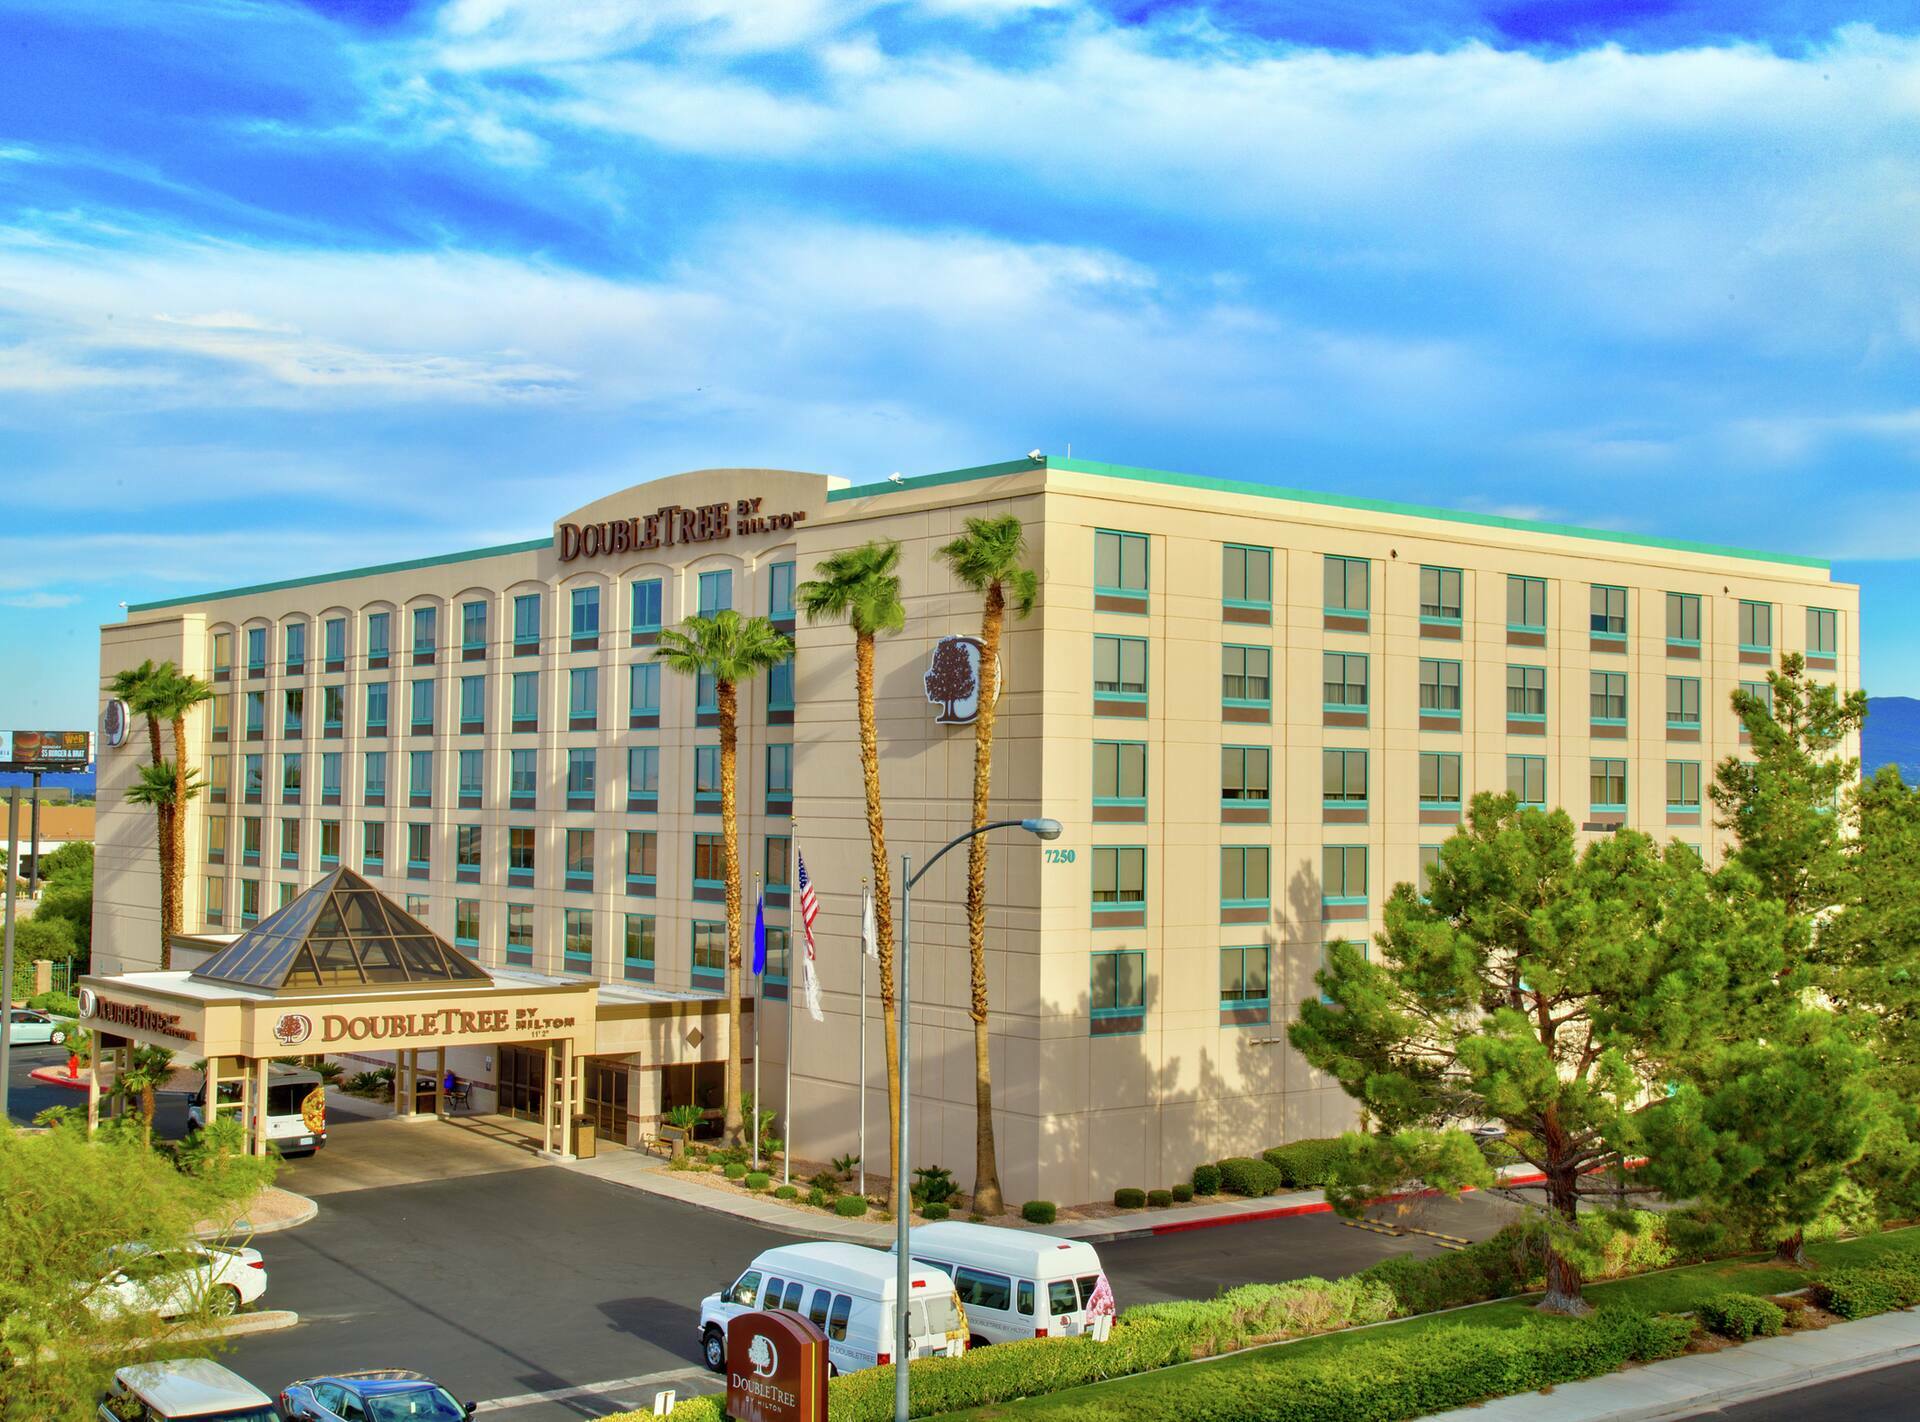 Photo of DoubleTree by Hilton Hotel Las Vegas Airport, Las Vegas, NV